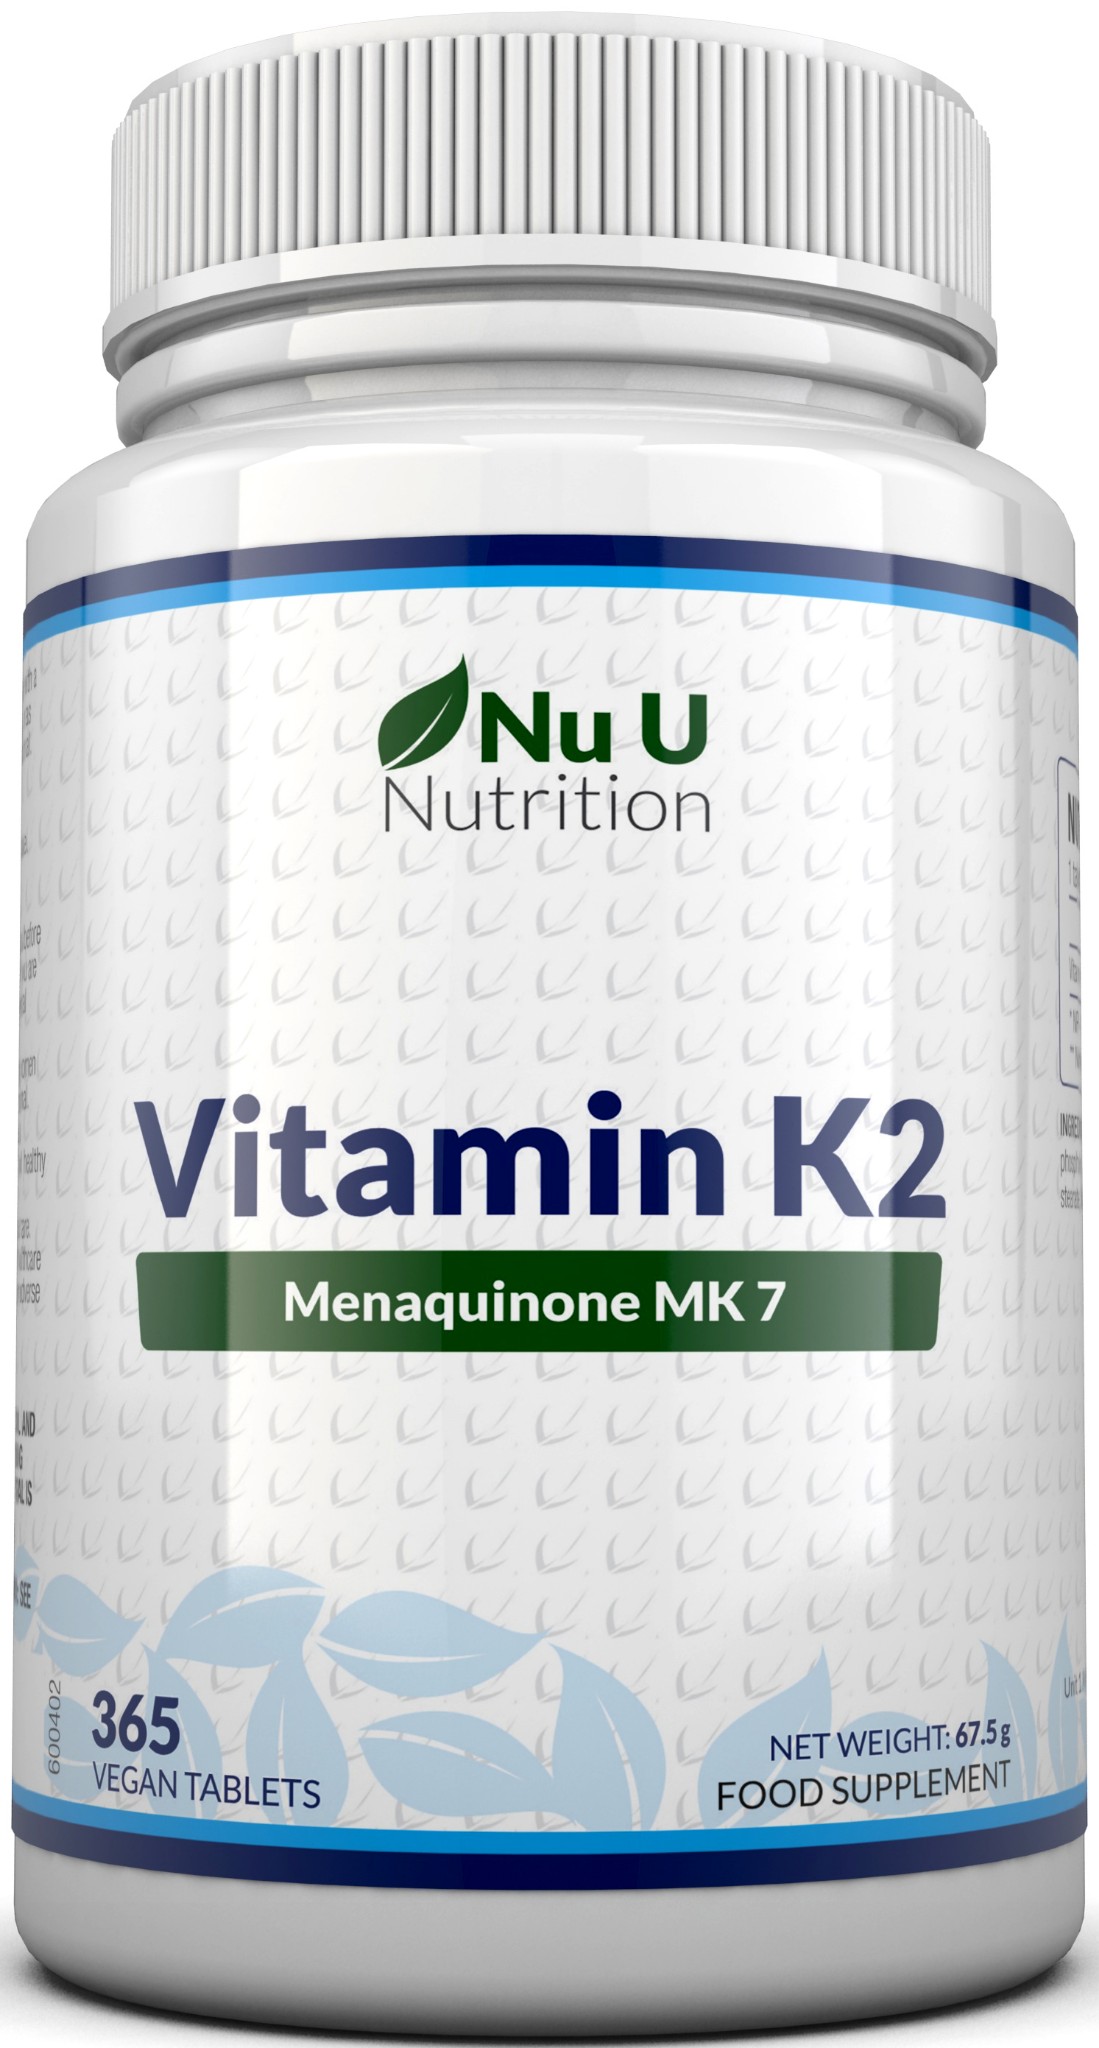 Vitamin K2 MK 7 0mcg - 365 Vegetarian and Vegan Tablets By Nu U Nutrition 10